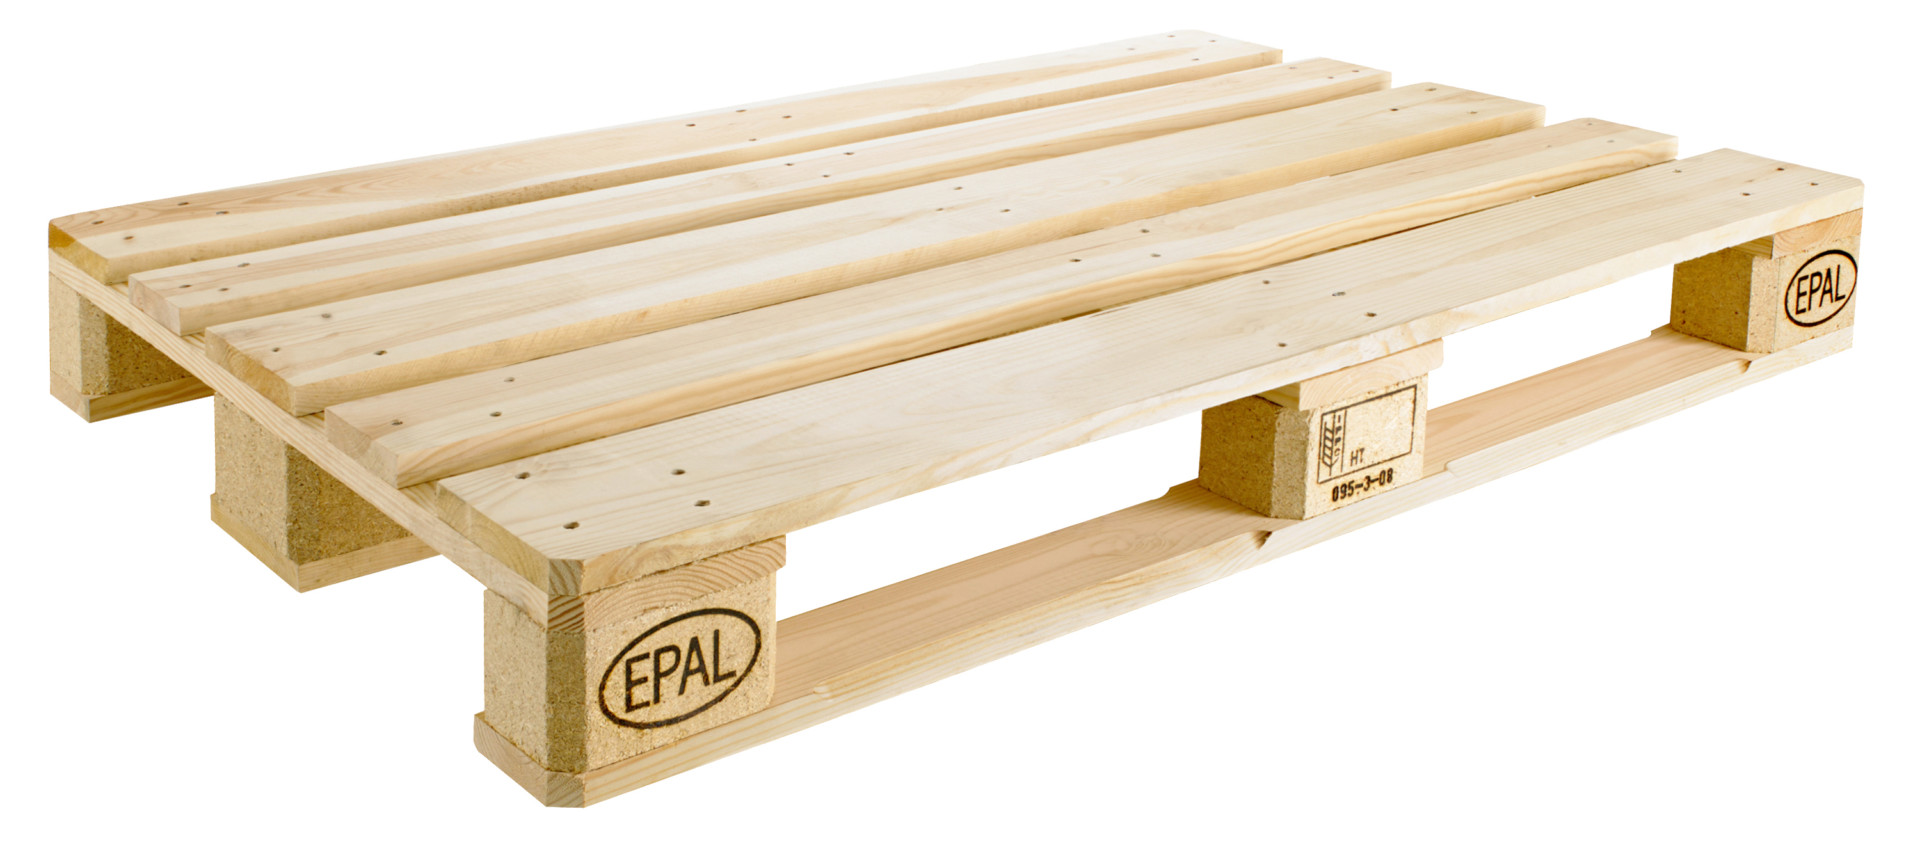 EPAL-Europalette-bc1125